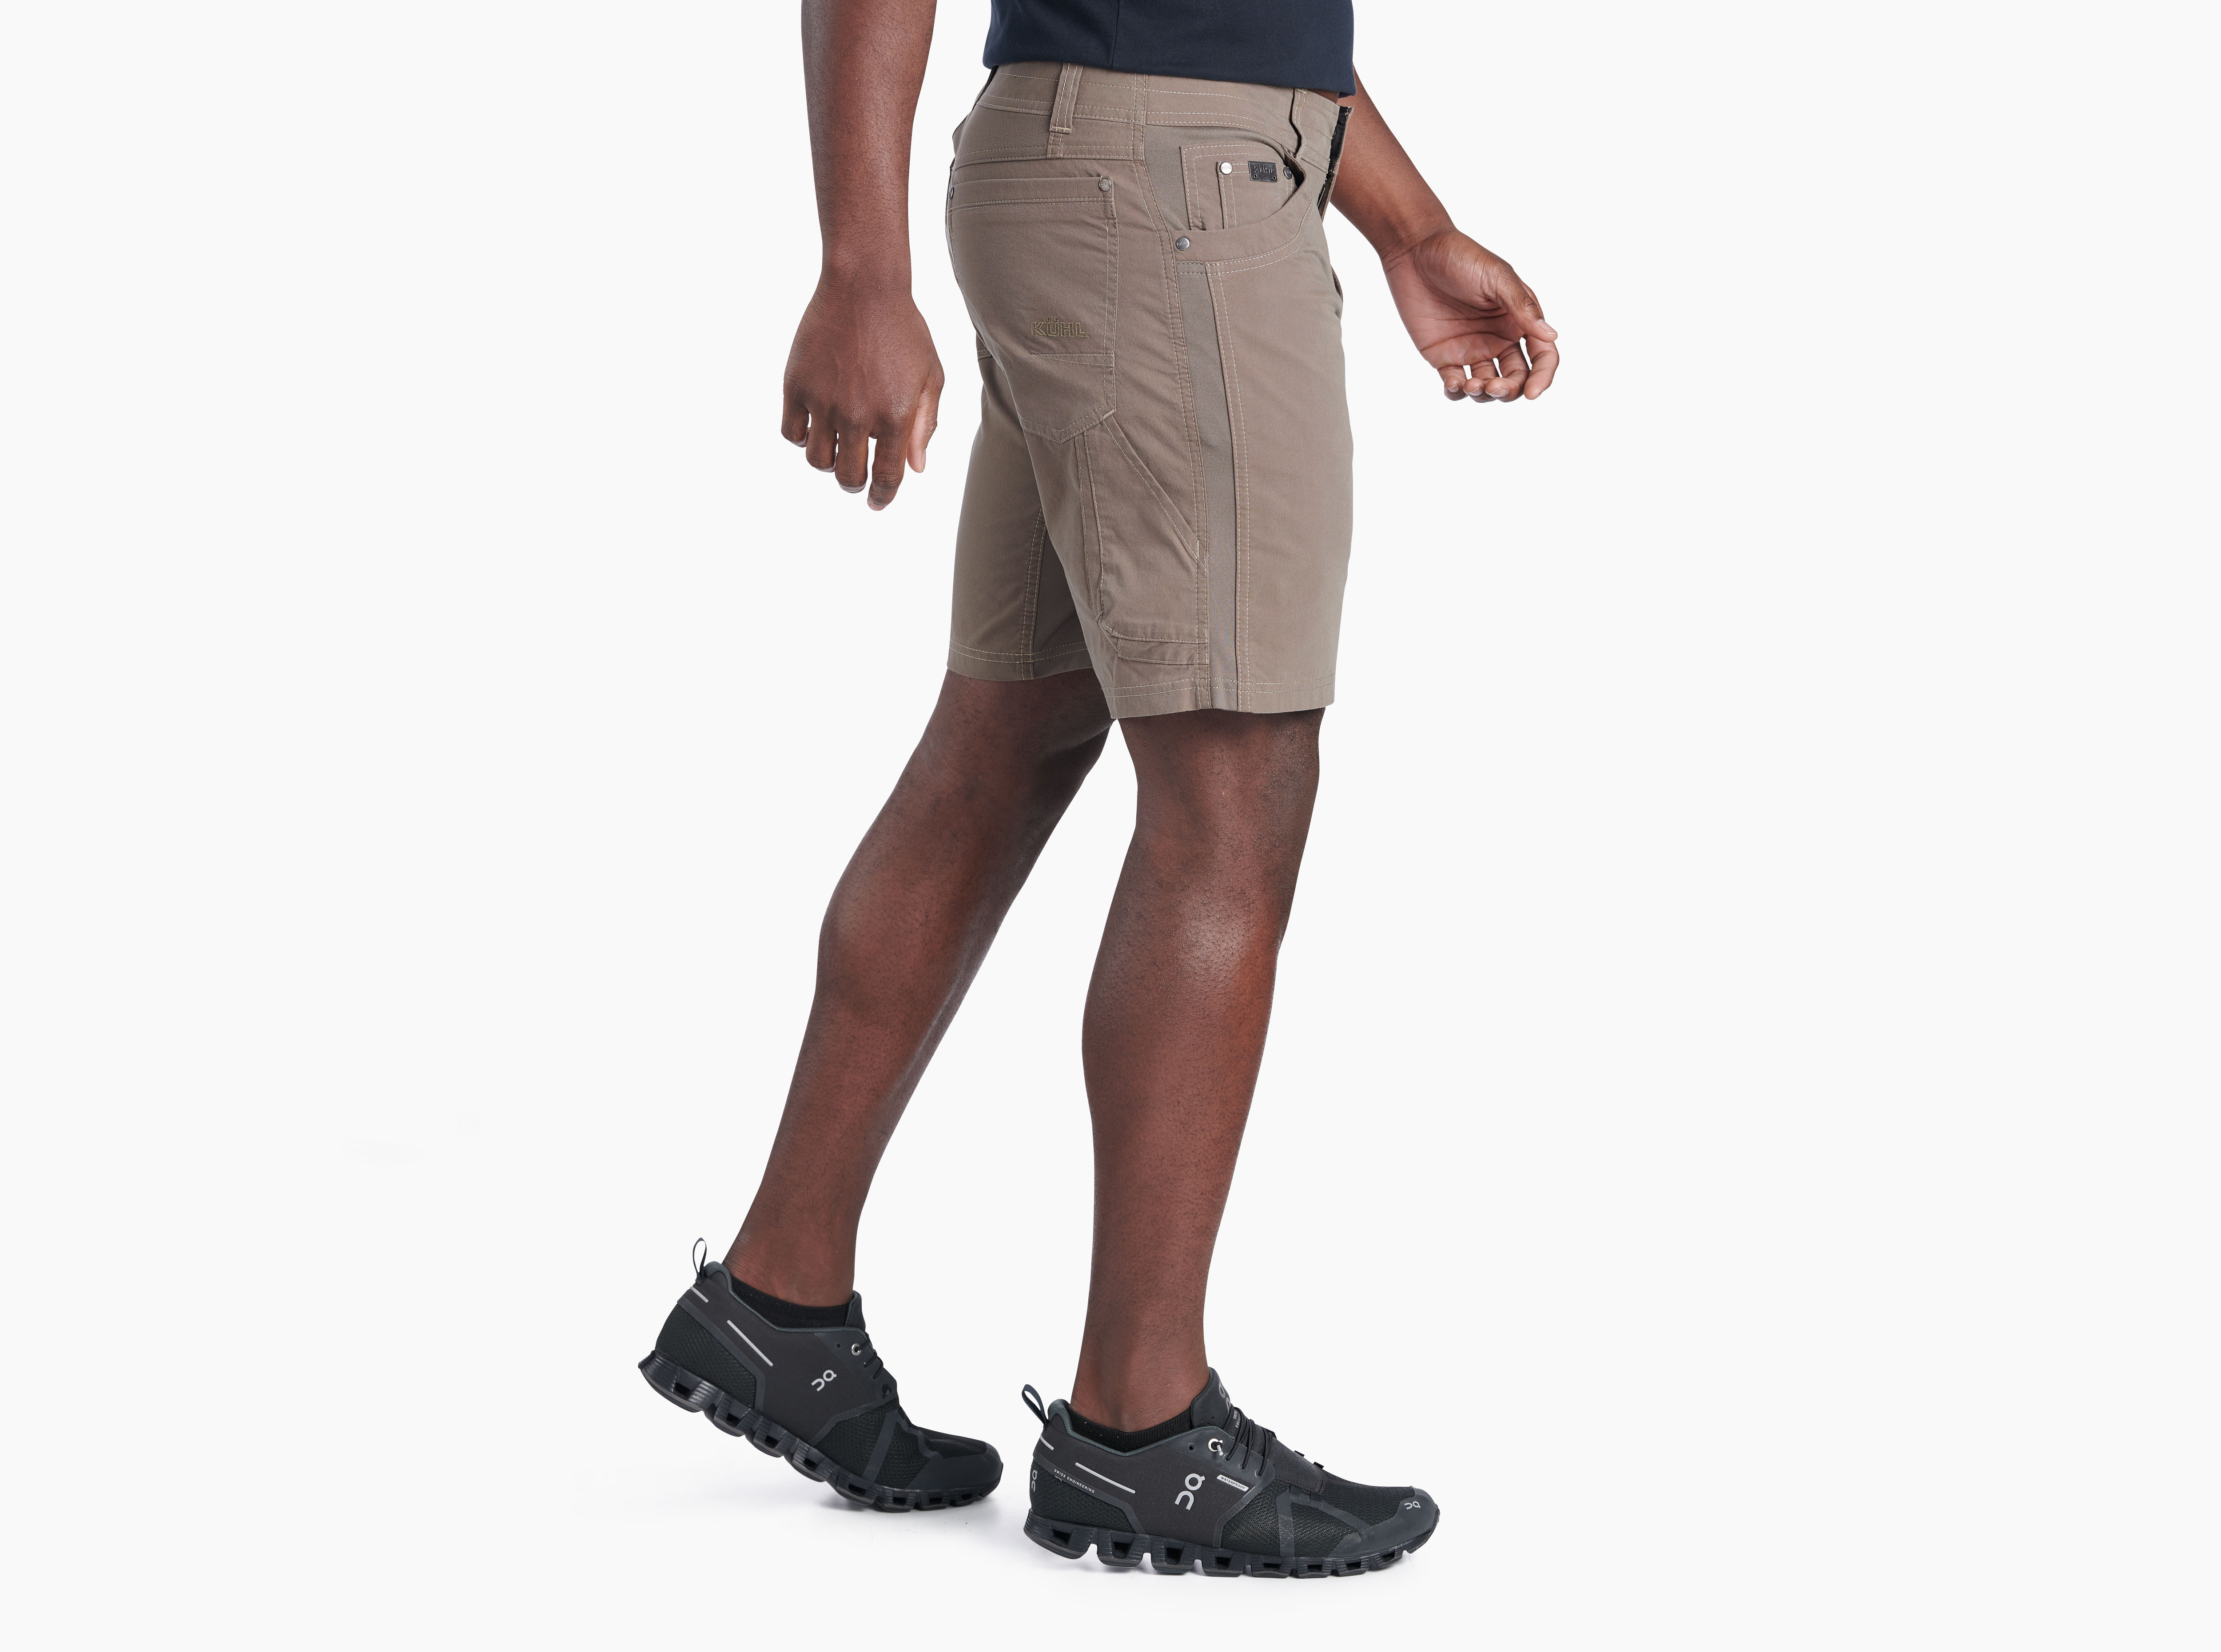 Shop Radikl® Short, Men's Shorts